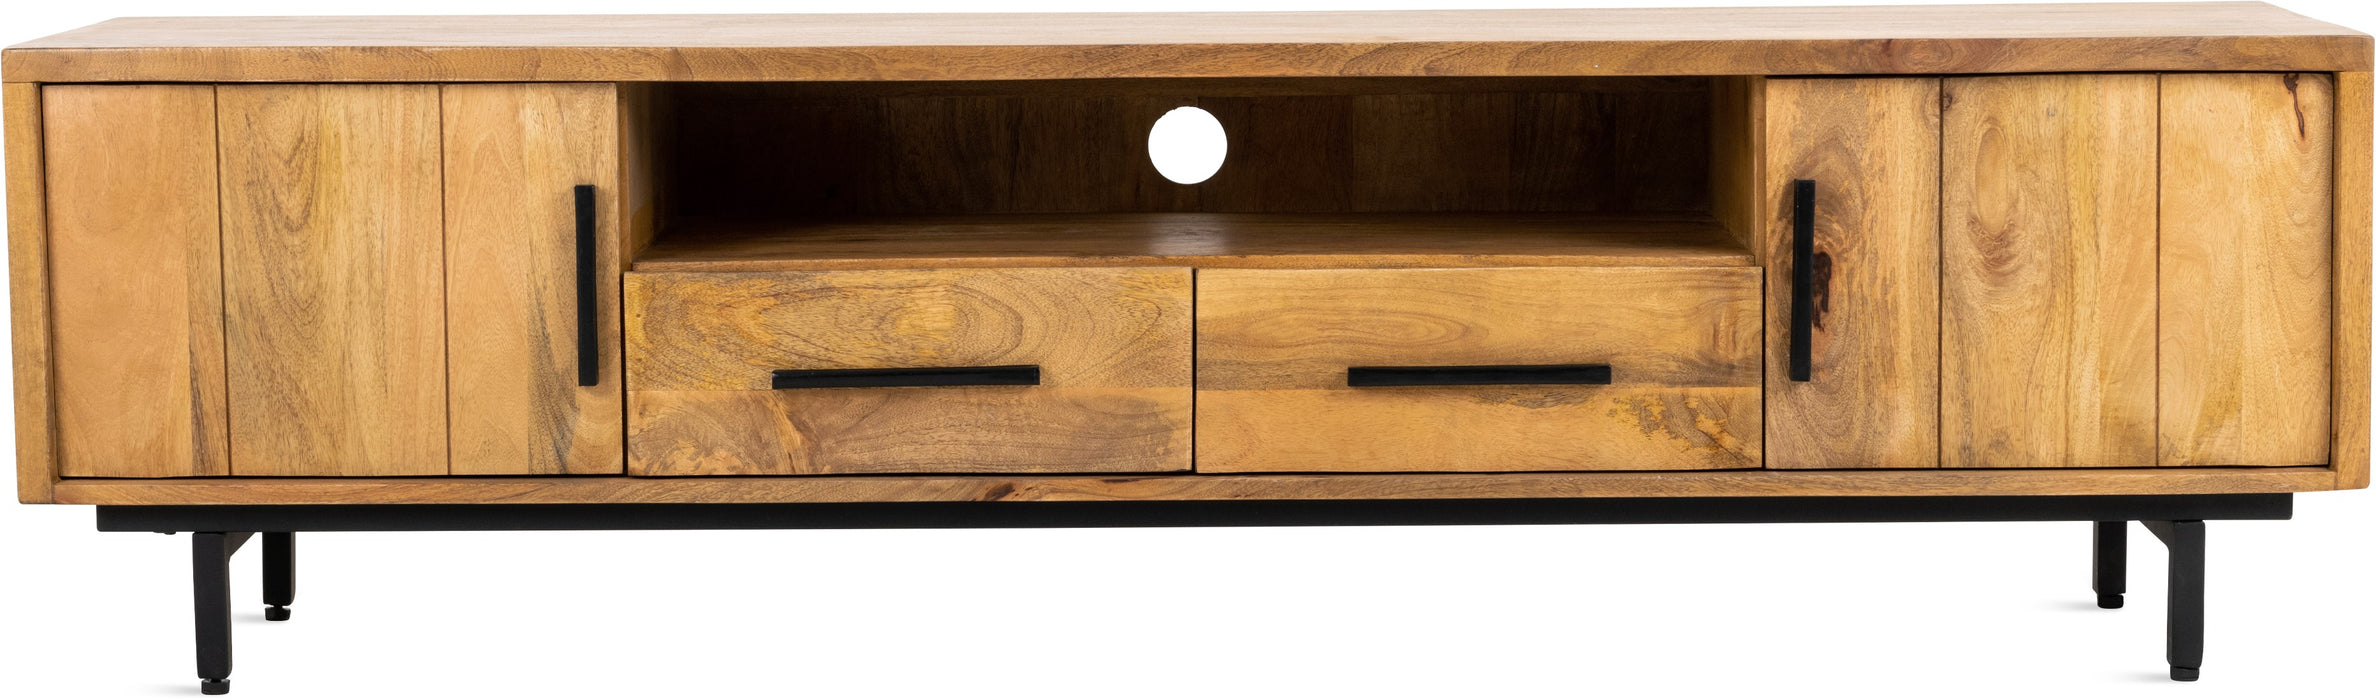 TV-meubel Mango hout | Industrieel Design | 180x40x50cm - Industrieelinhuis.nl